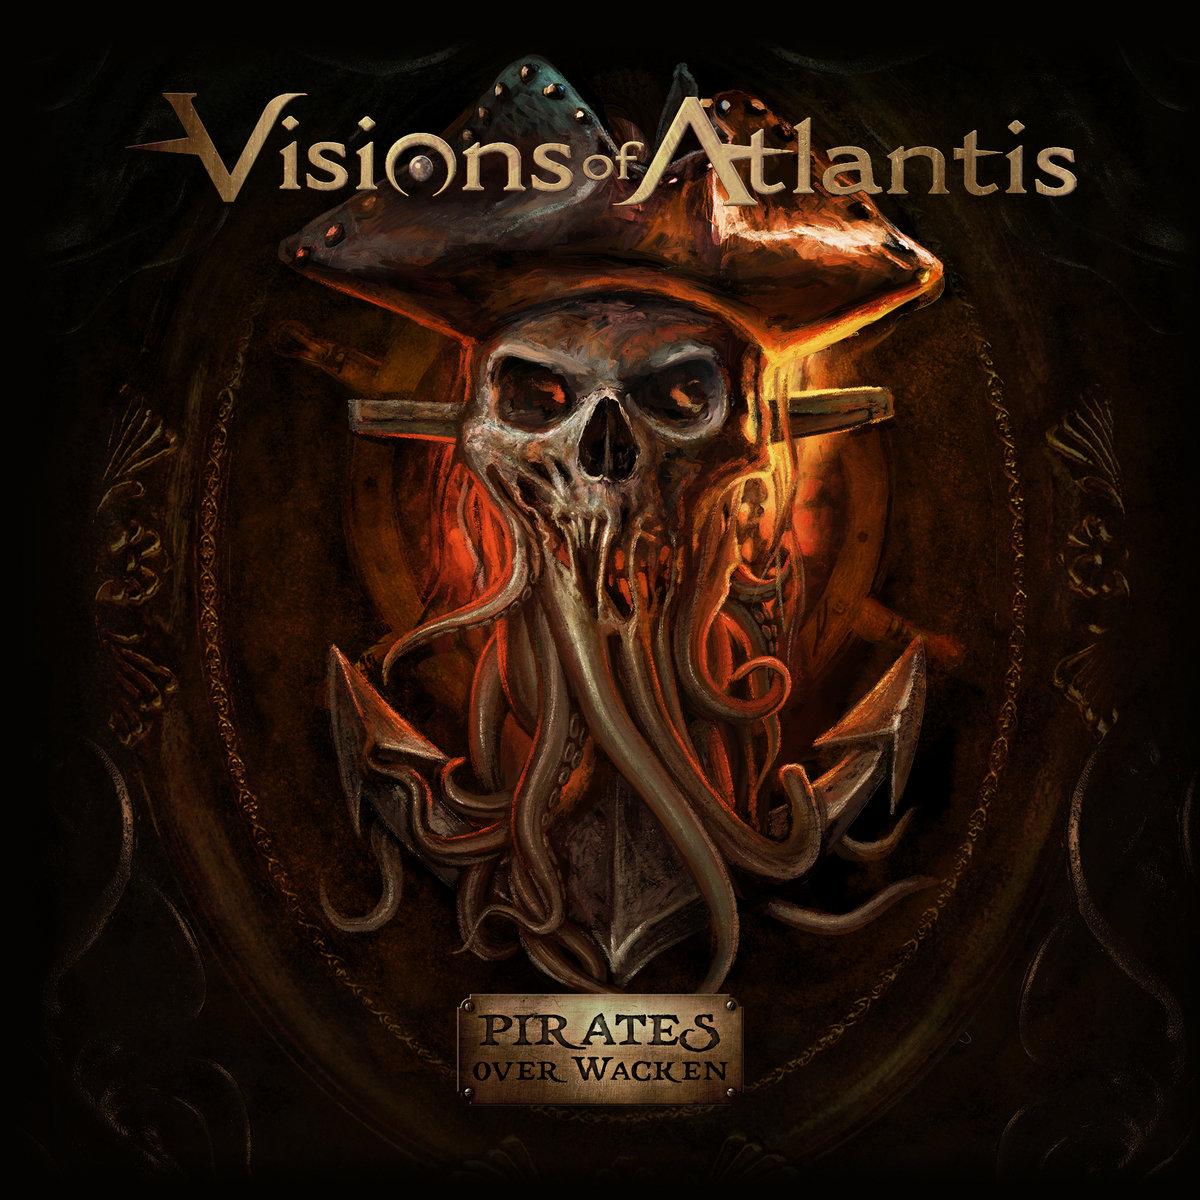 Visions of atlantis pirates over wacken 1